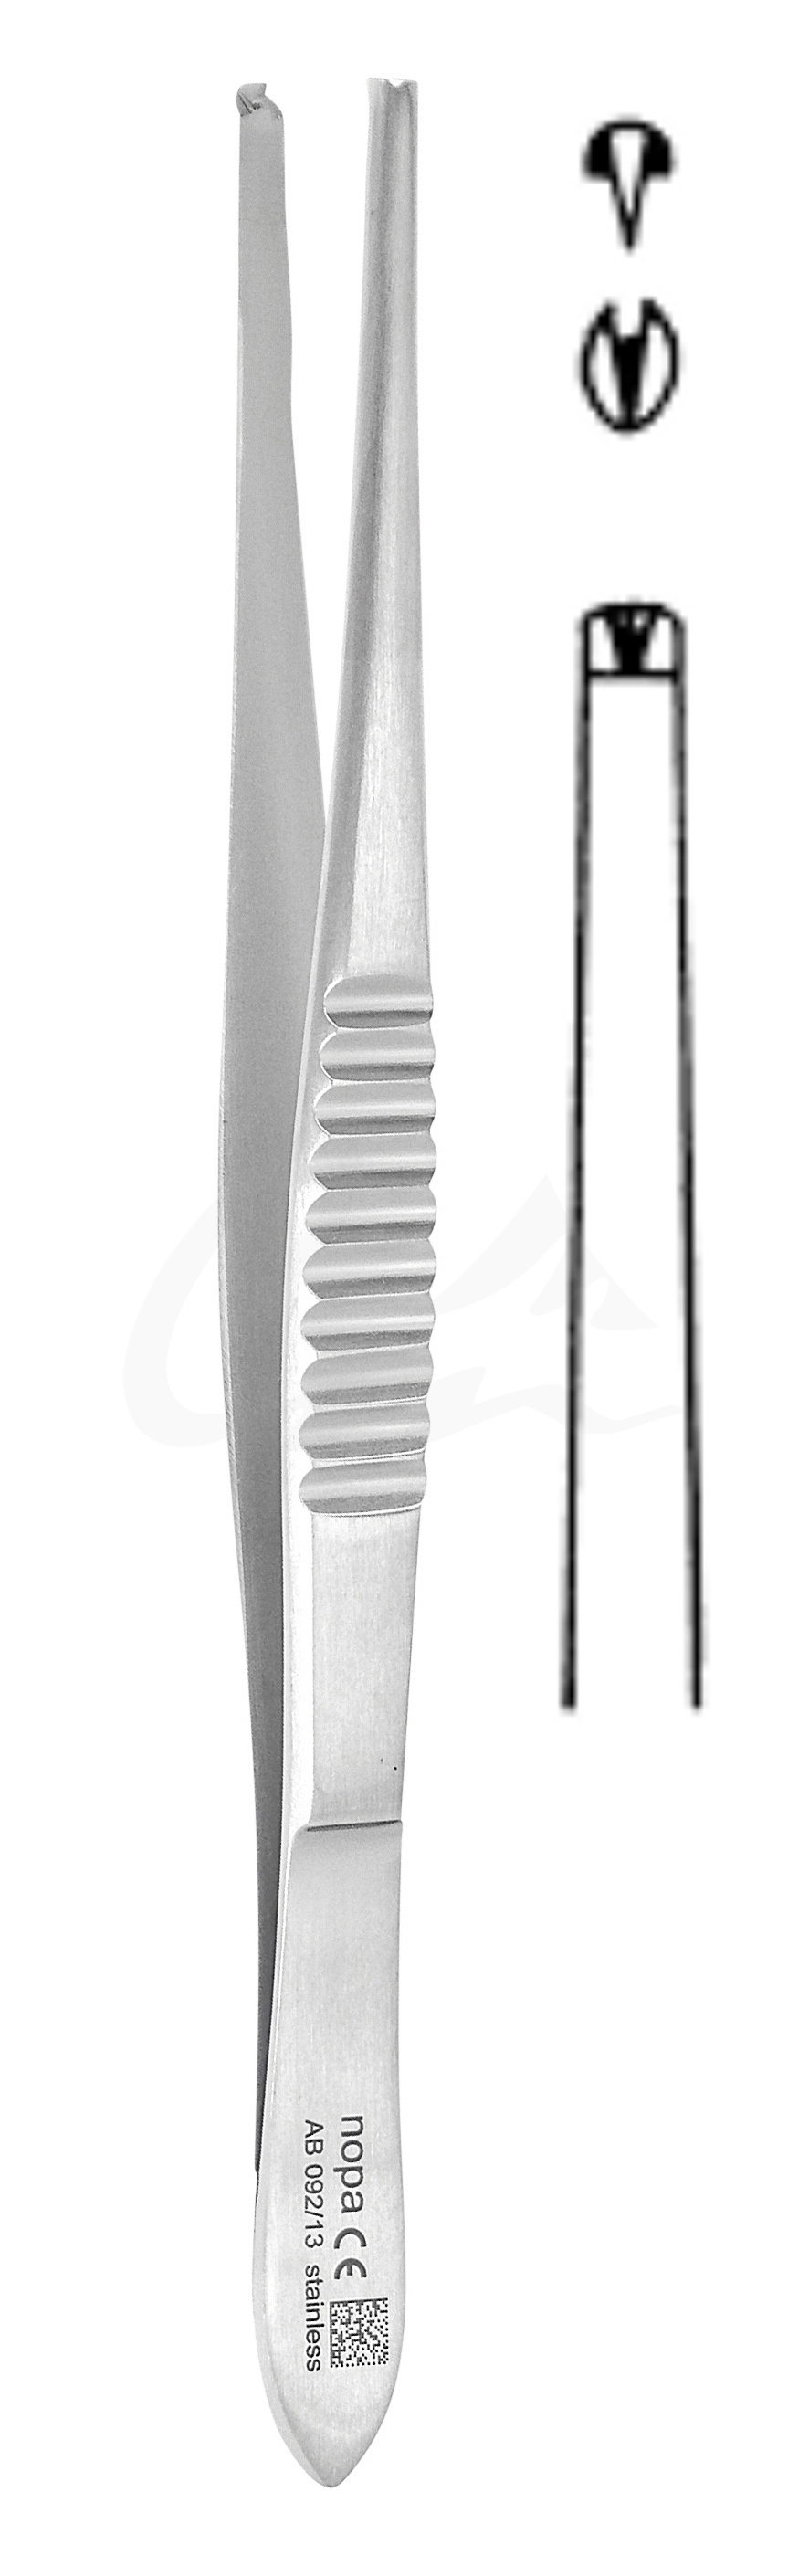 Nopa Modell USA Tissue Forcep 1x2 Teeth 18cm